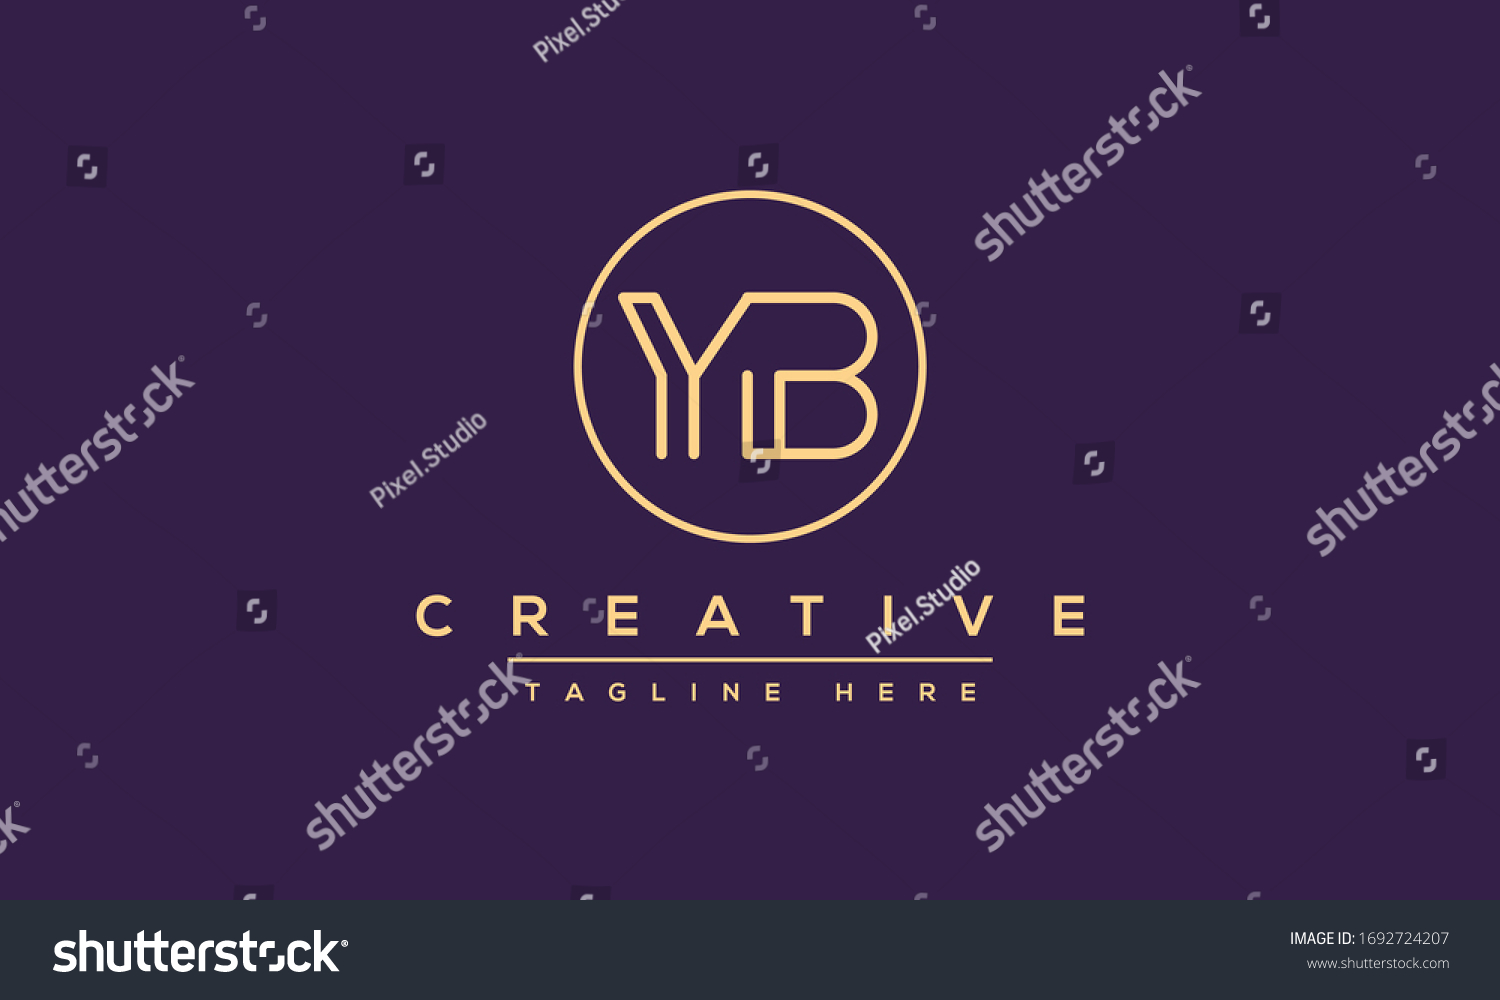 Yb Logo Design Abstract Vector Monogram Stock Vector Royalty Free 1692724207 Shutterstock 3850